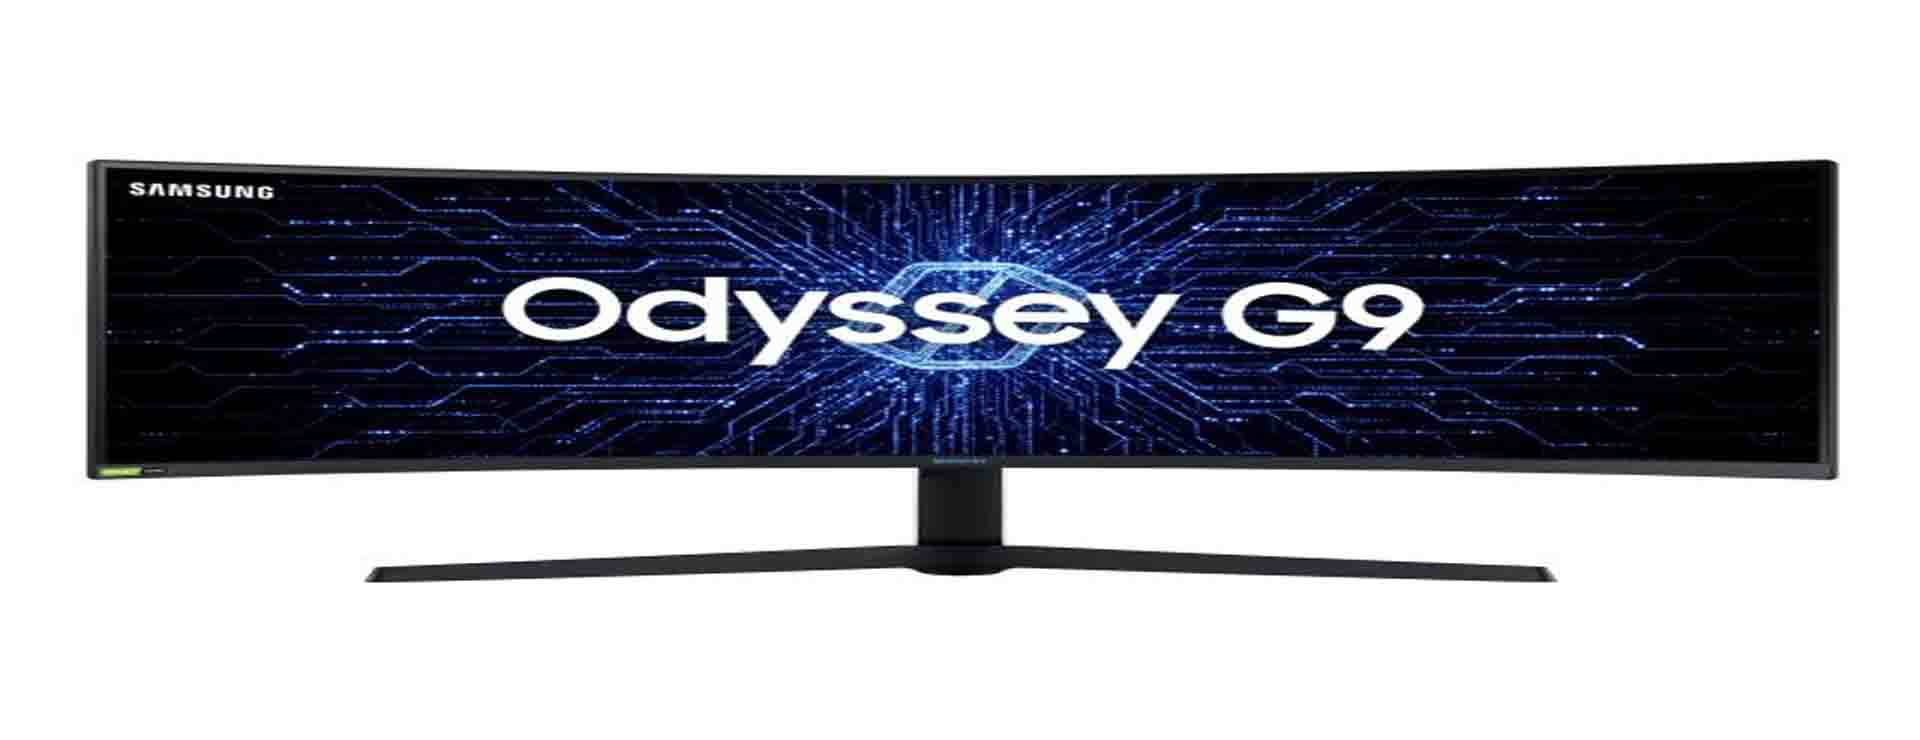 odyssey g9